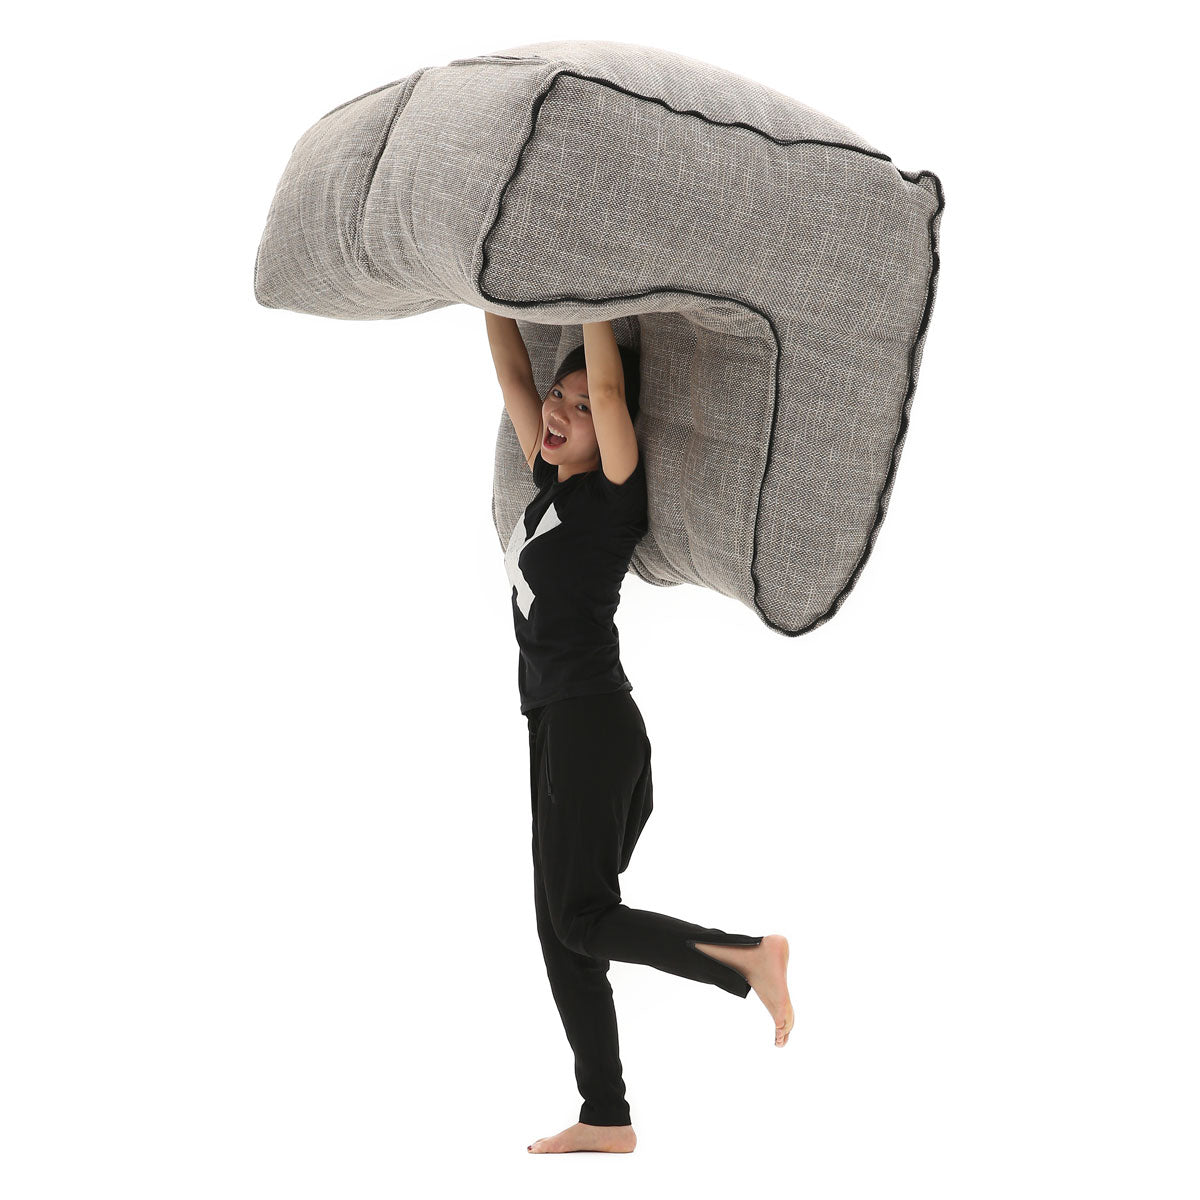 Modular bean bag sofa is amazingly lightweight